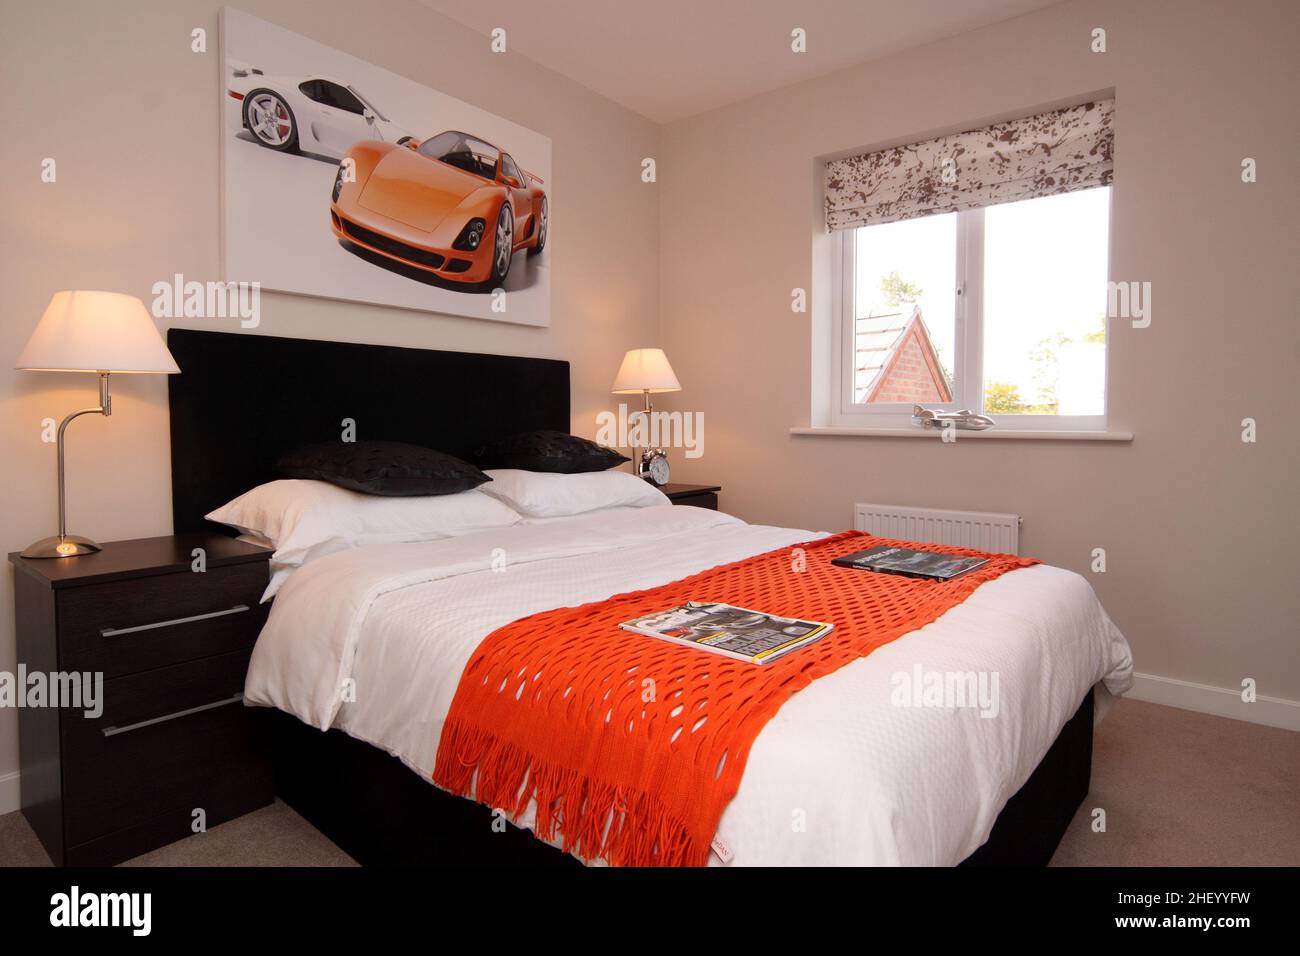 Boys bedroom, racing car motor sport theme, orange black colour color scheme,double kingsize bed, side light. Stock Photo